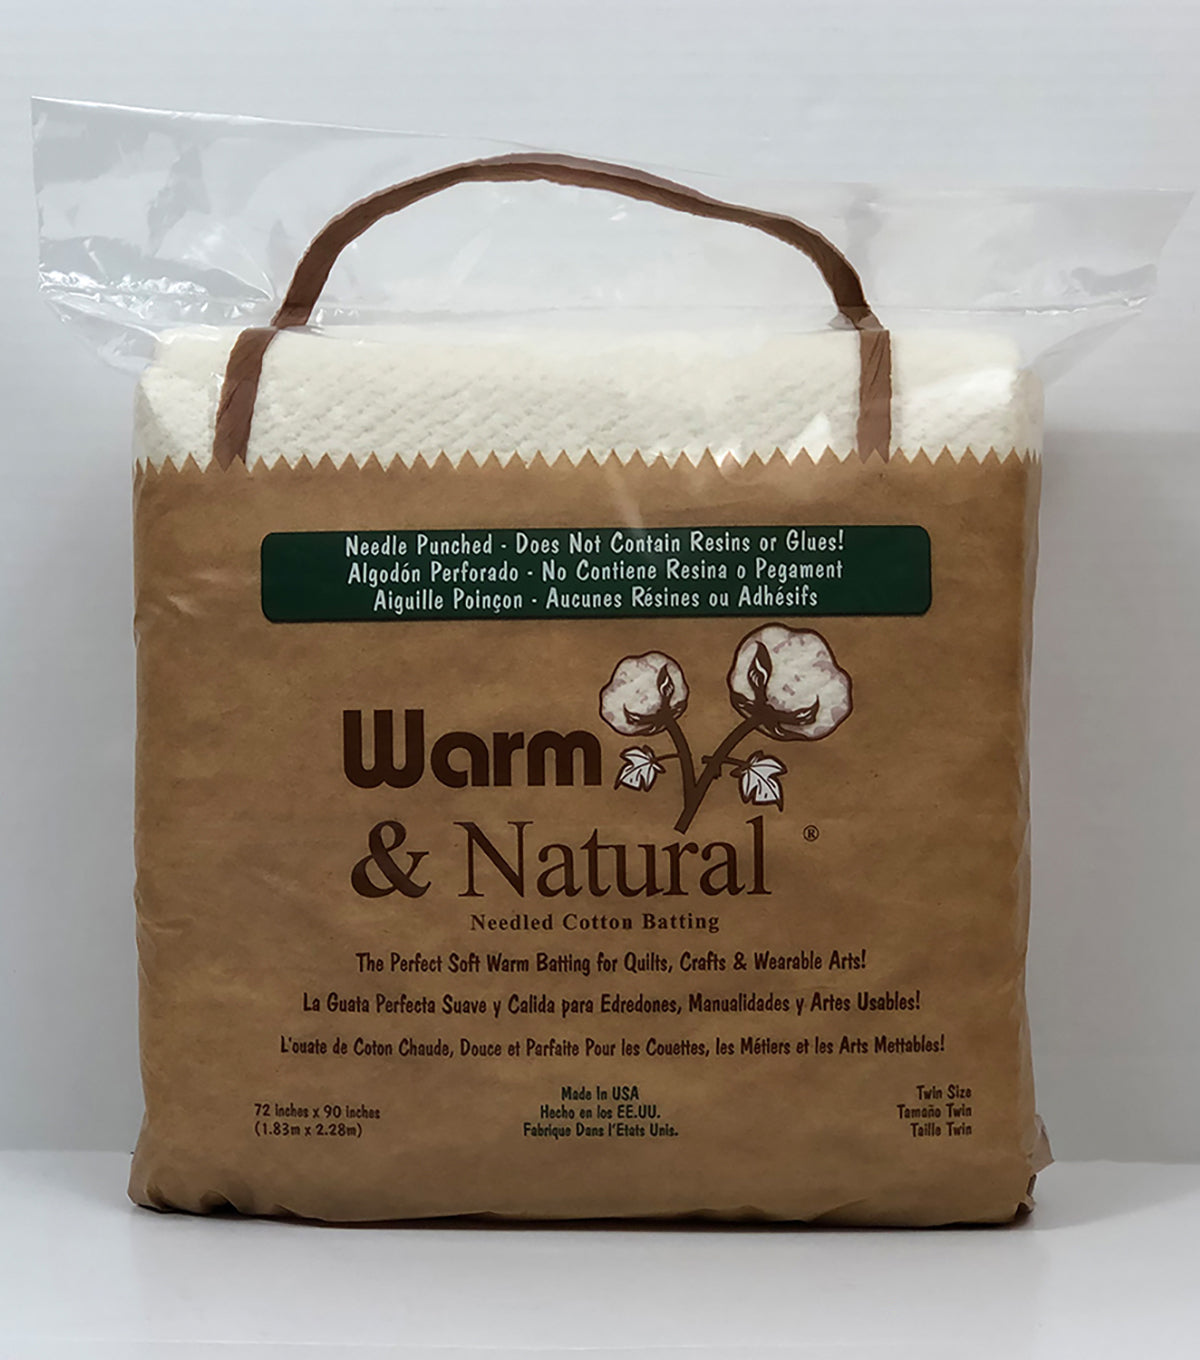 Warm Company Warm & Natural Cotton Batting-Crib Size 45X60